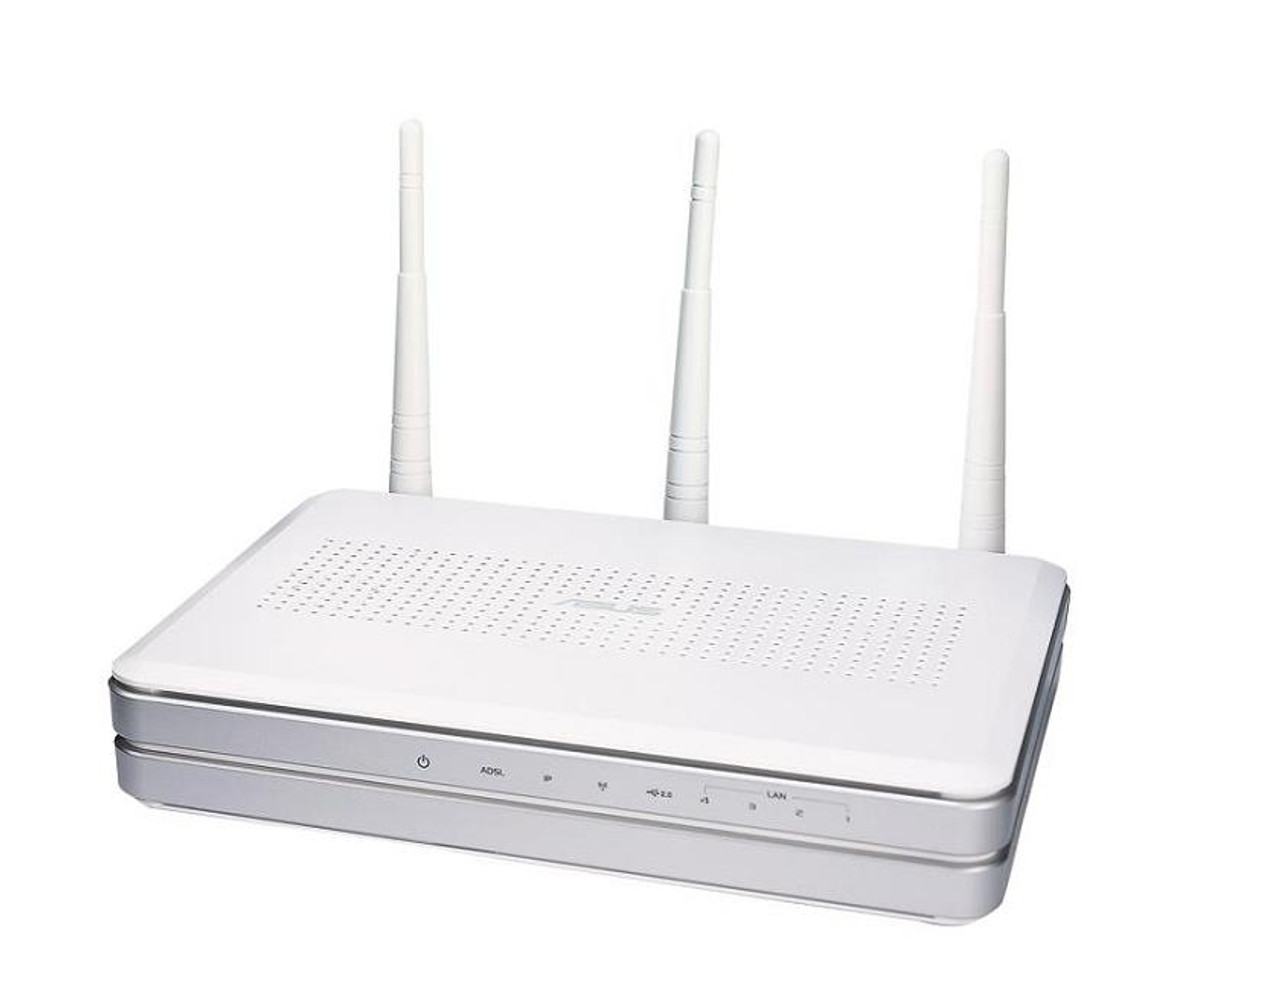 DSL-N13 ASUS Wireless ADSL 2/2+ Modem Router (Refurbished)